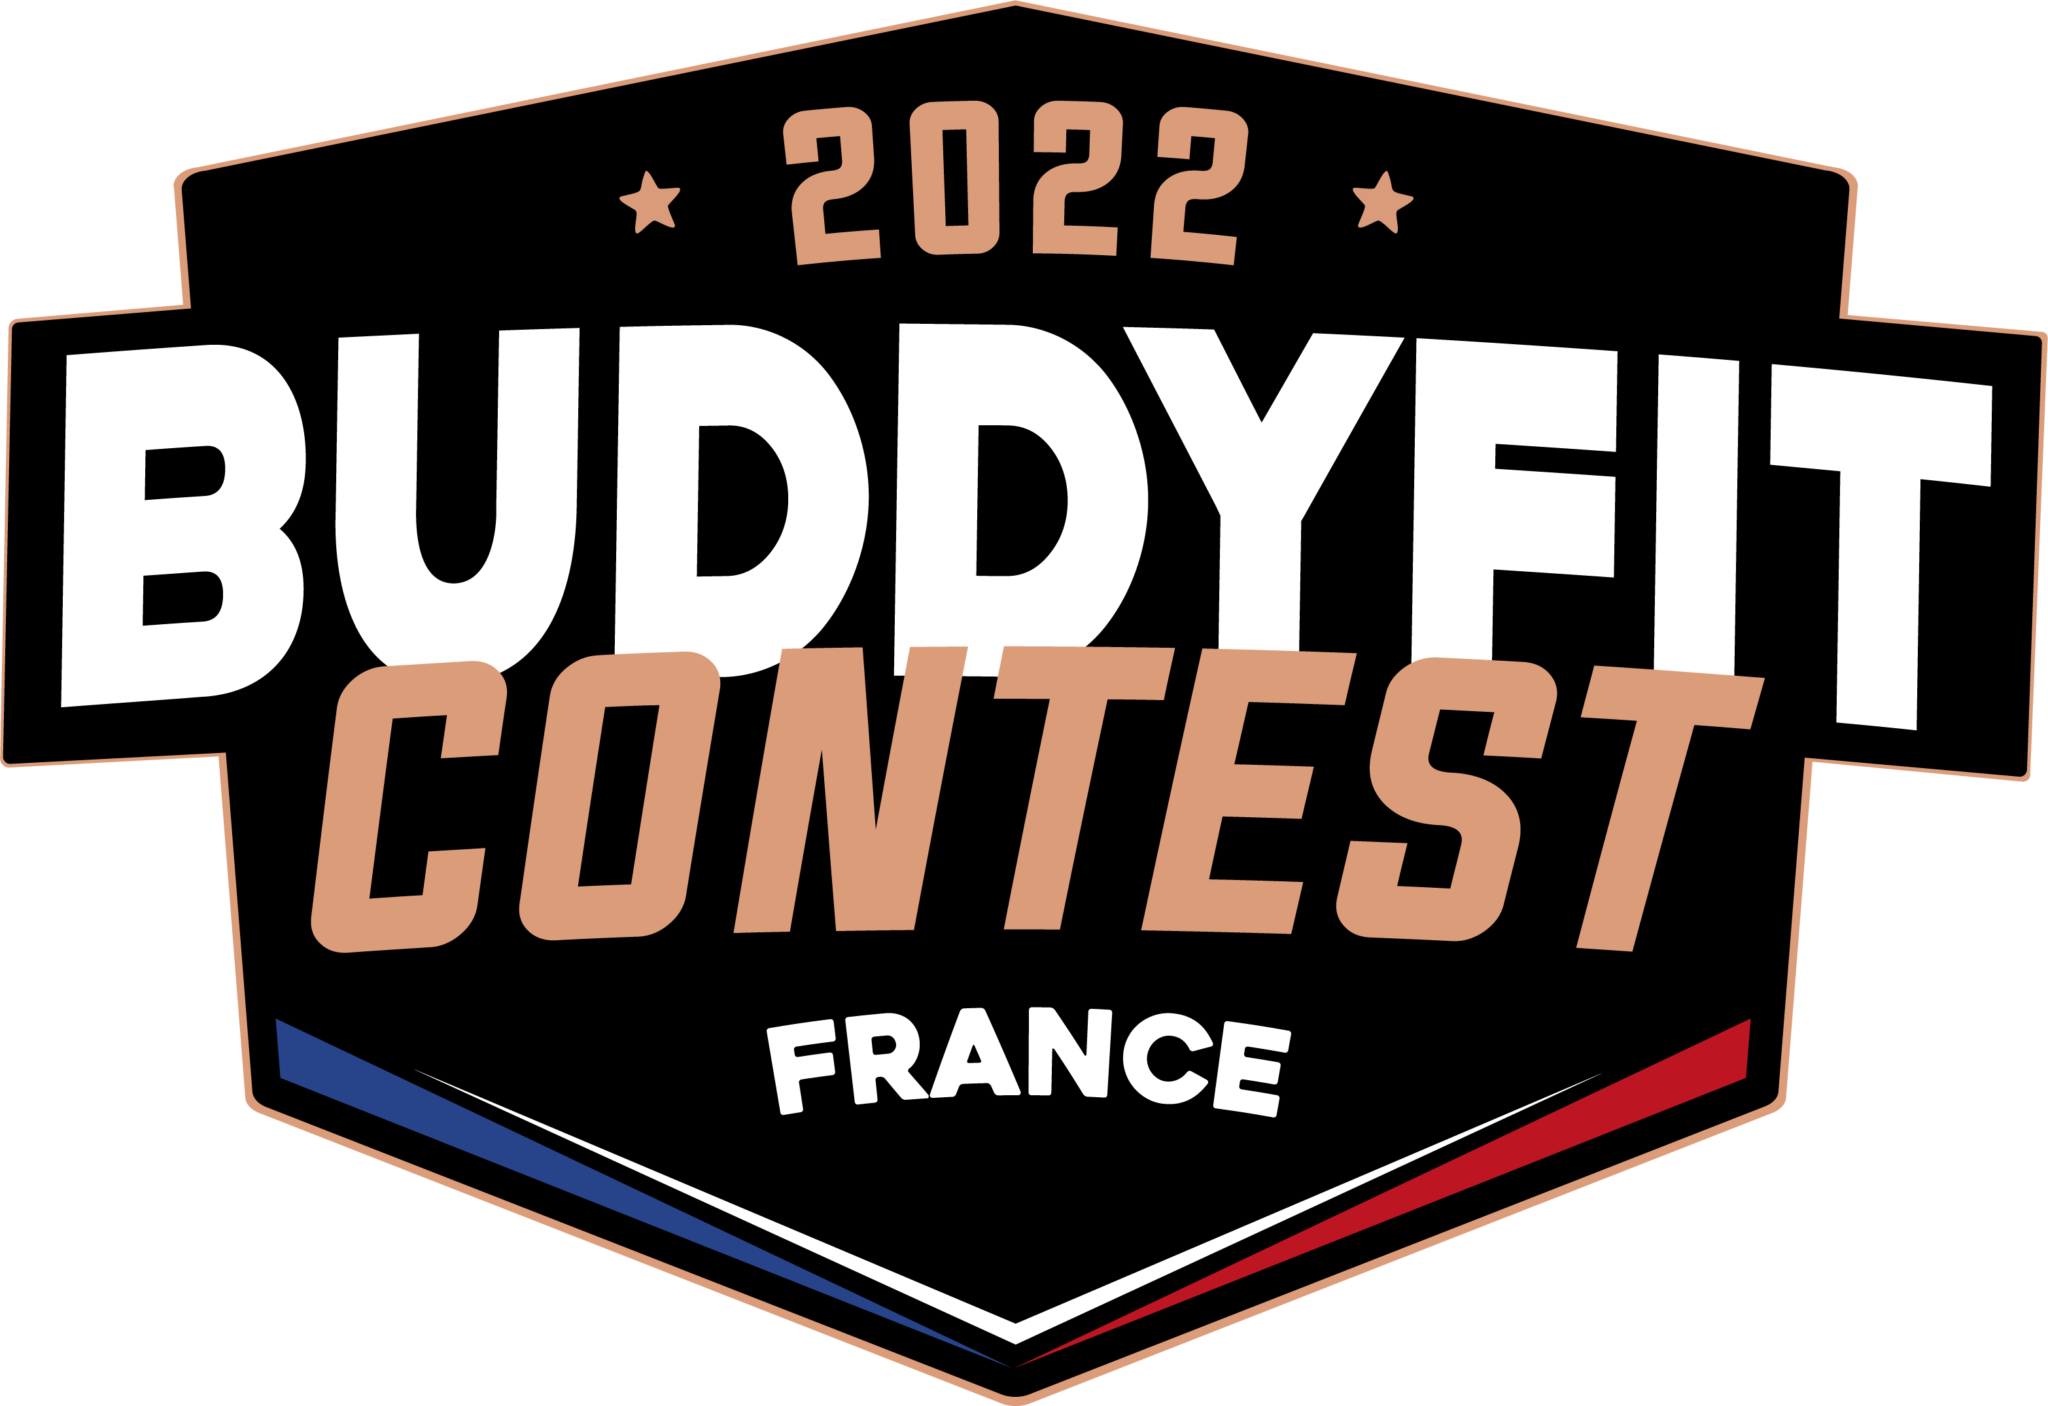 Buddyfit Contest